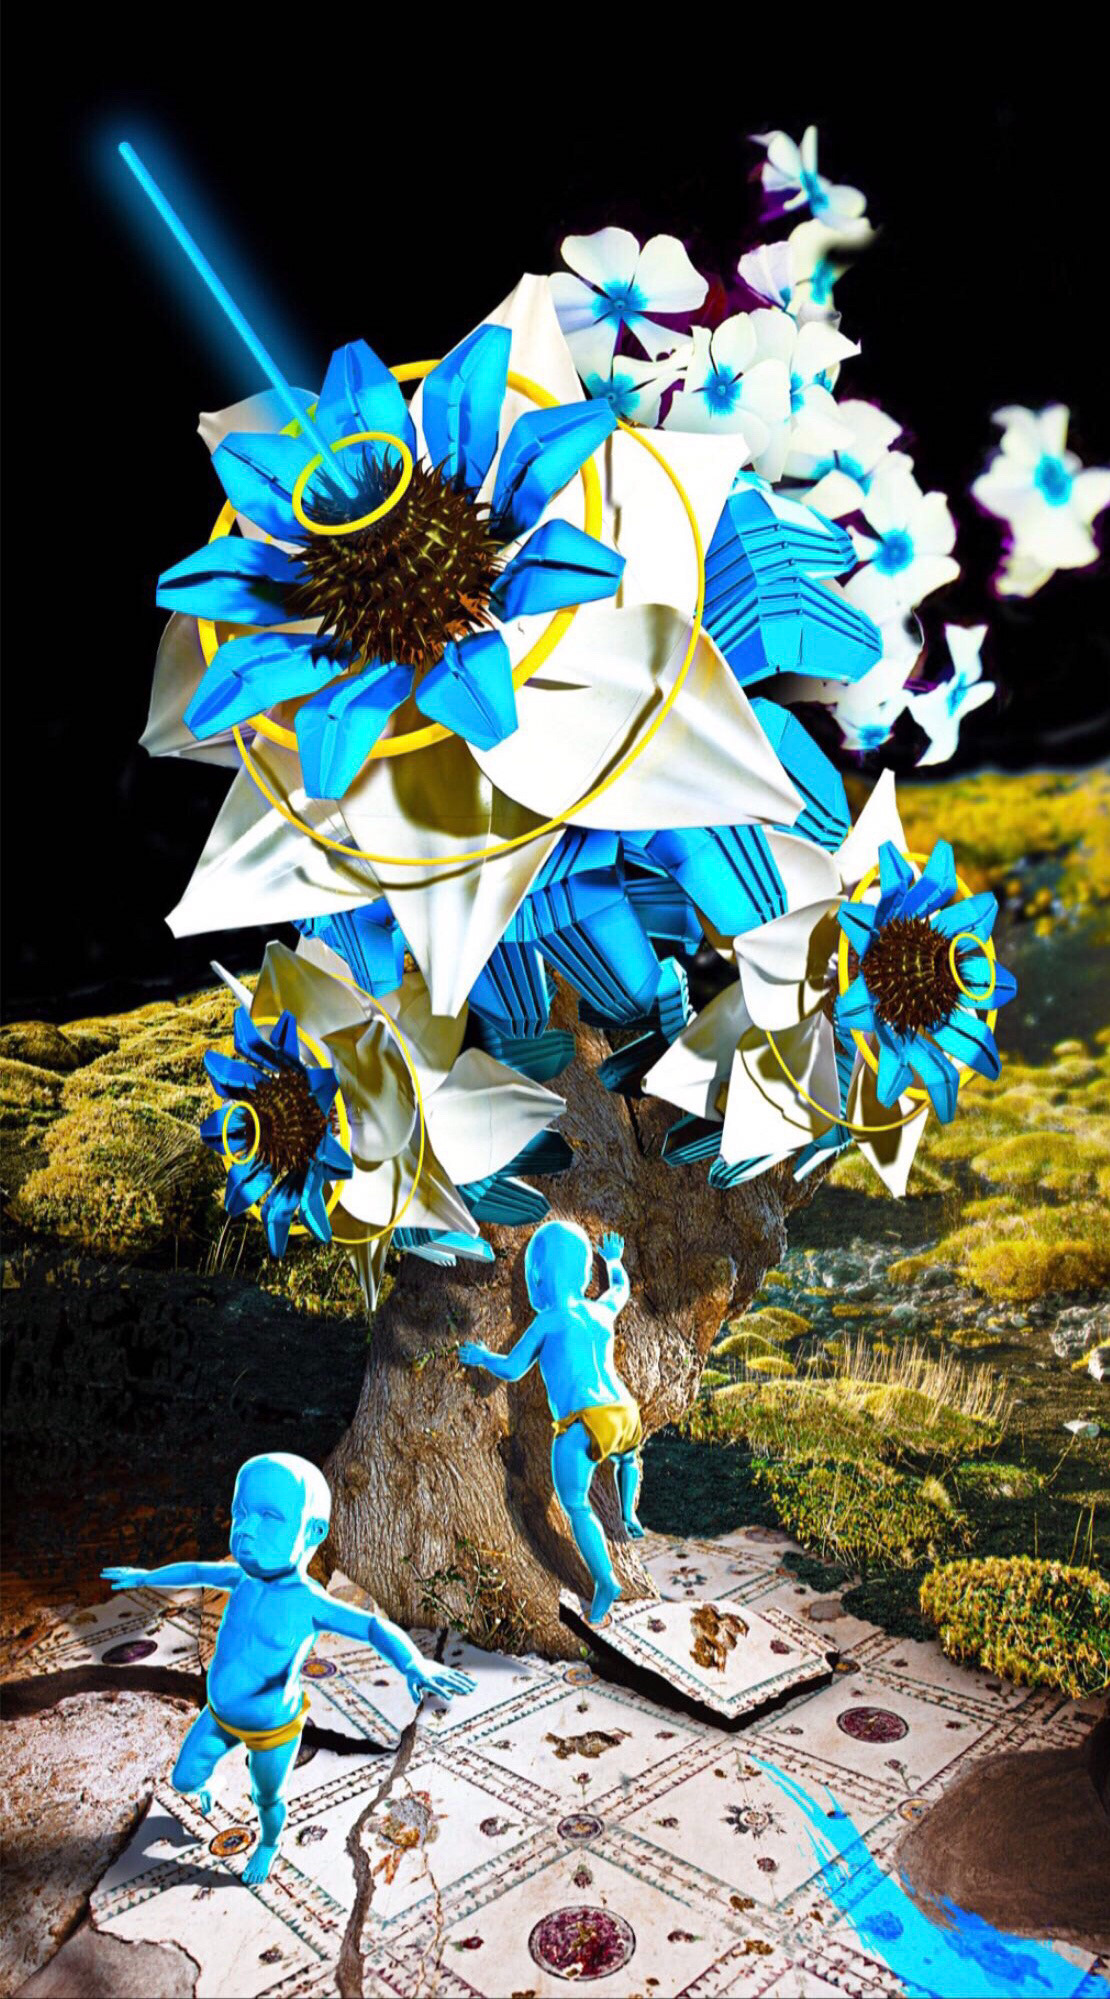 Illustrator photoshop cinema 4d still life flower art Digital Art  shapes composition strange art mix portrait